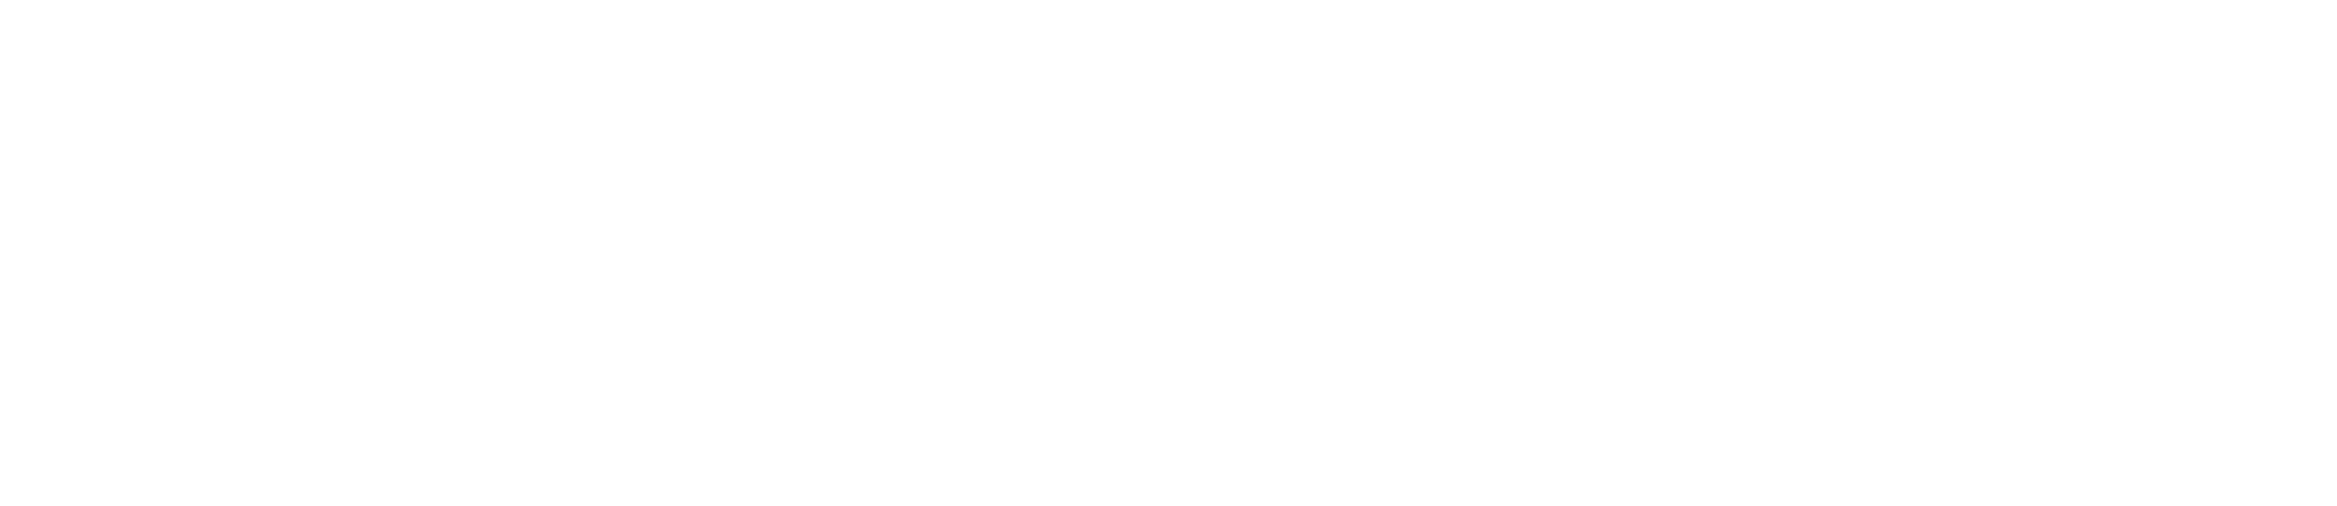 PlumberCo logo